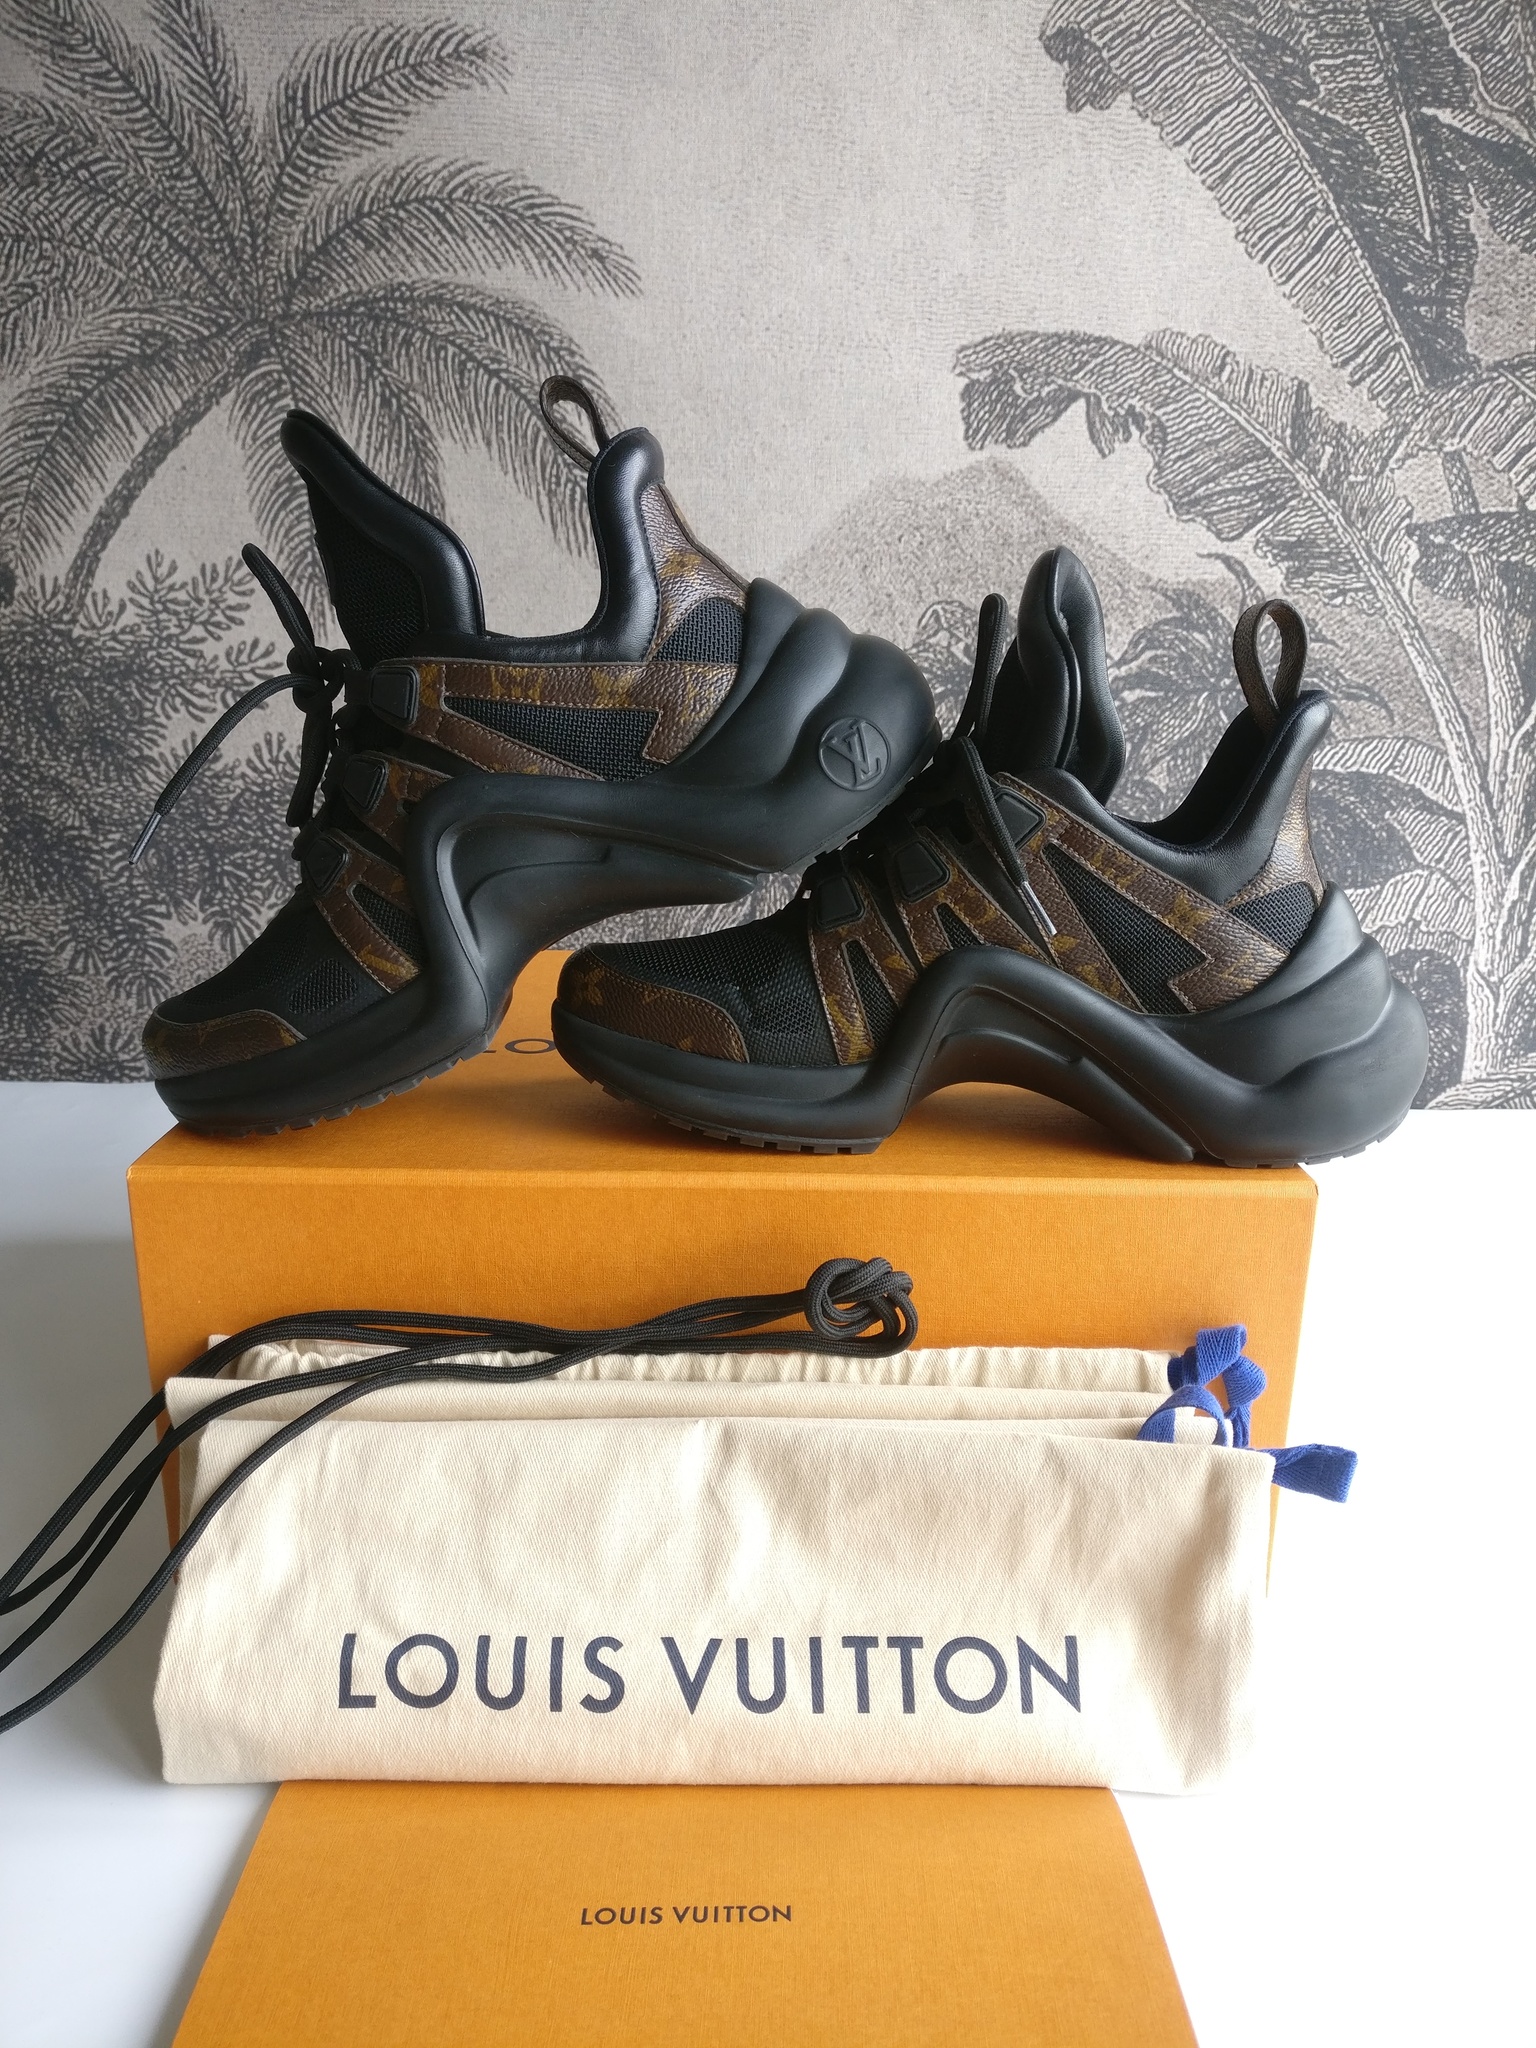 Louis Vuitton Archlight trainer